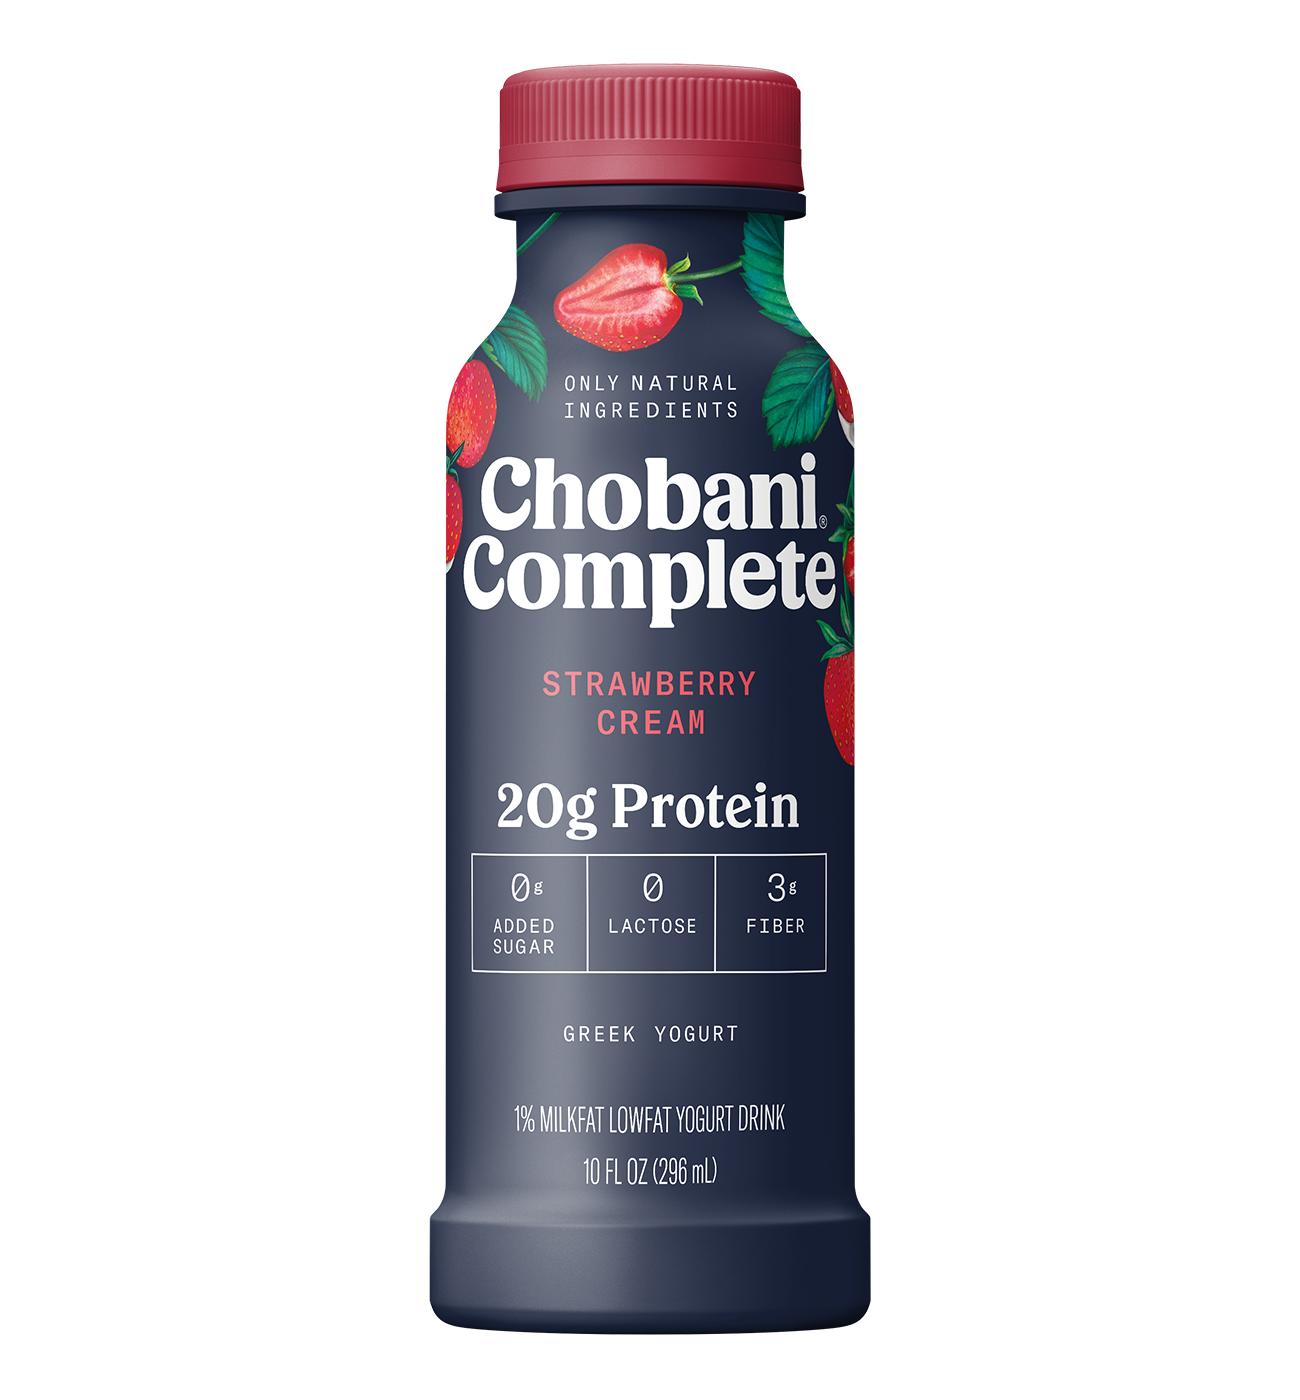 Chobani Complete Strawberry Cream Greek Yogurt Shake; image 1 of 6